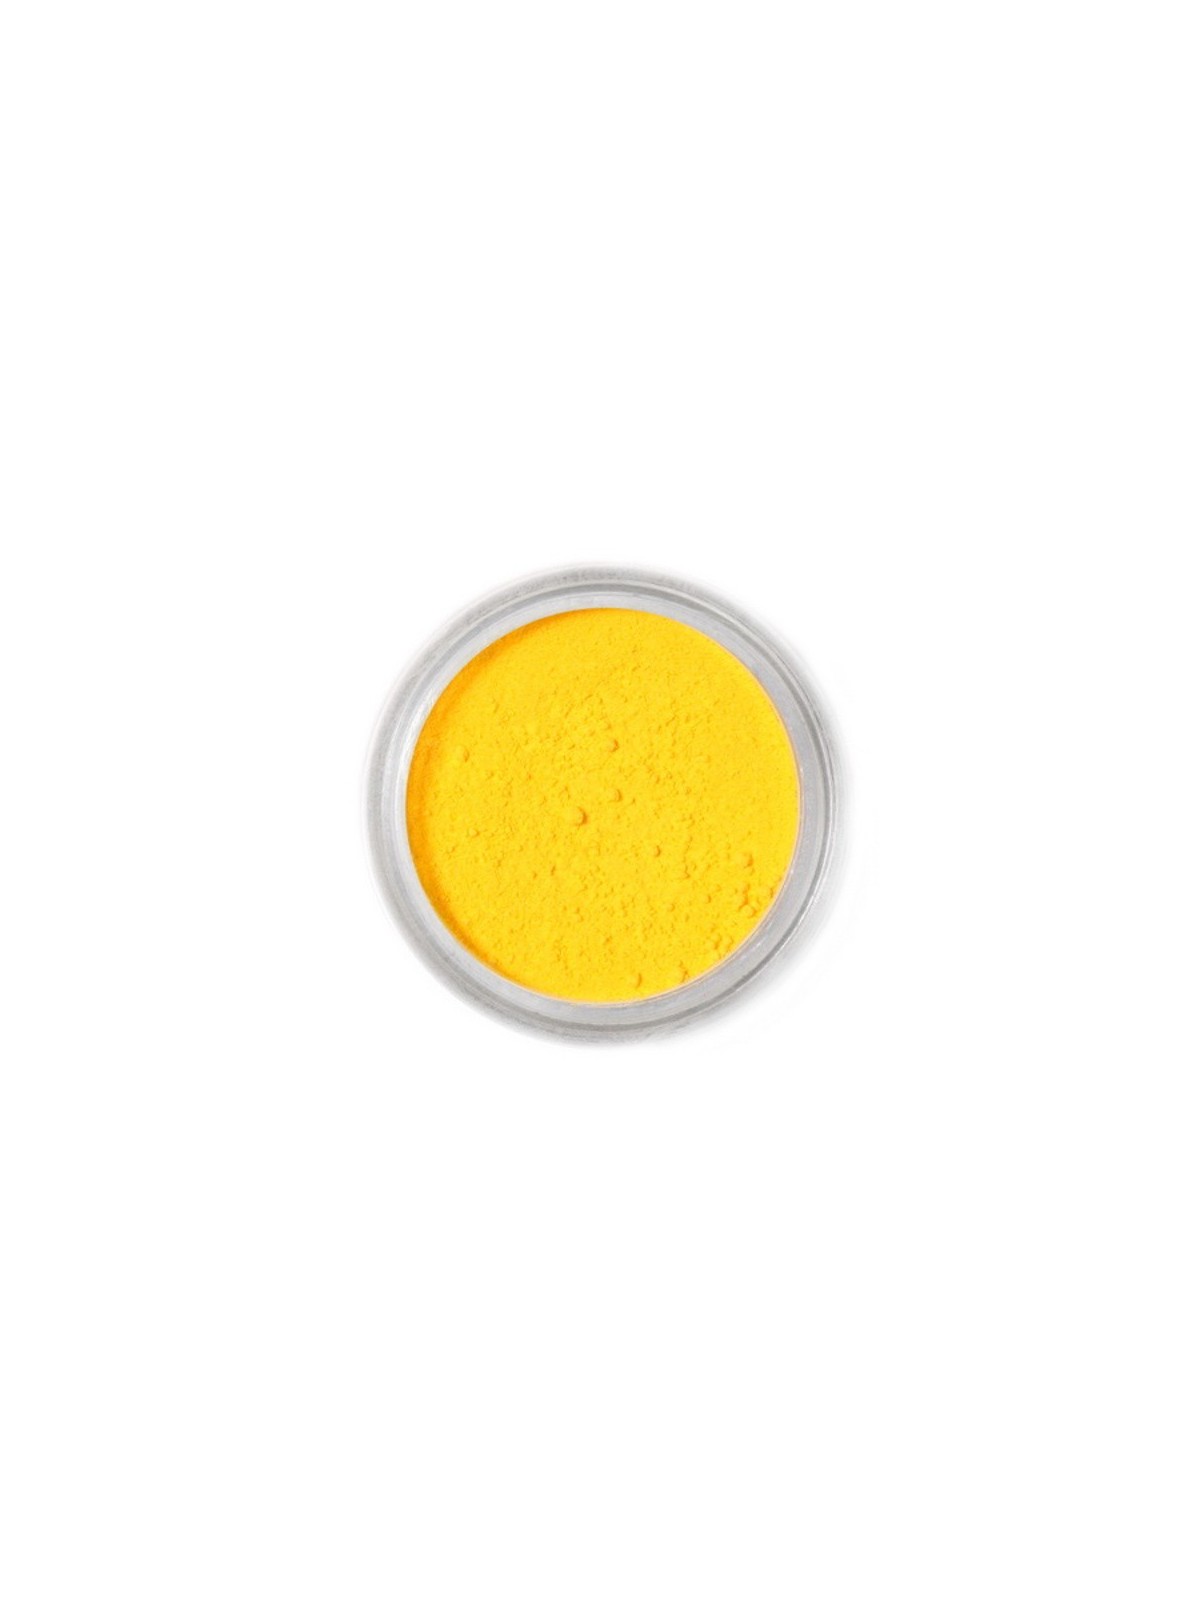 Jedlá prachová barva Fractal - Canary Yellow, Kanári sárga (2,5 g)